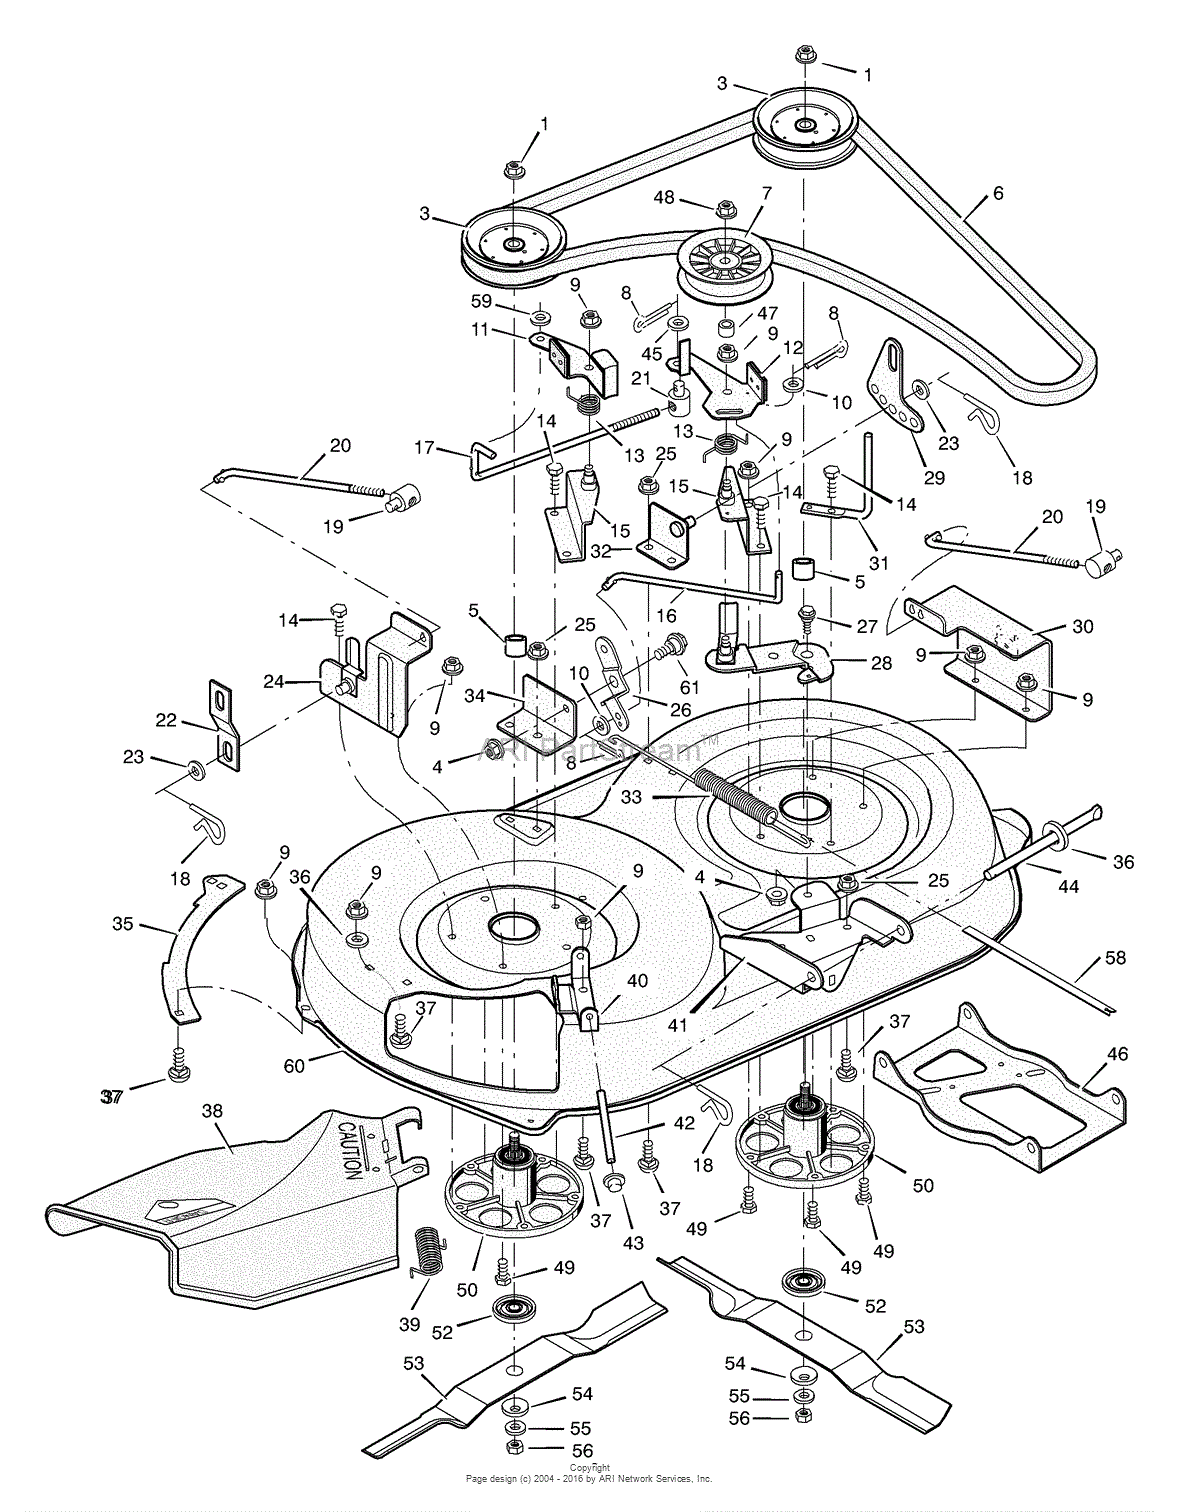 28 Push Lawn Mower Parts Diagram - Wiring Diagram List